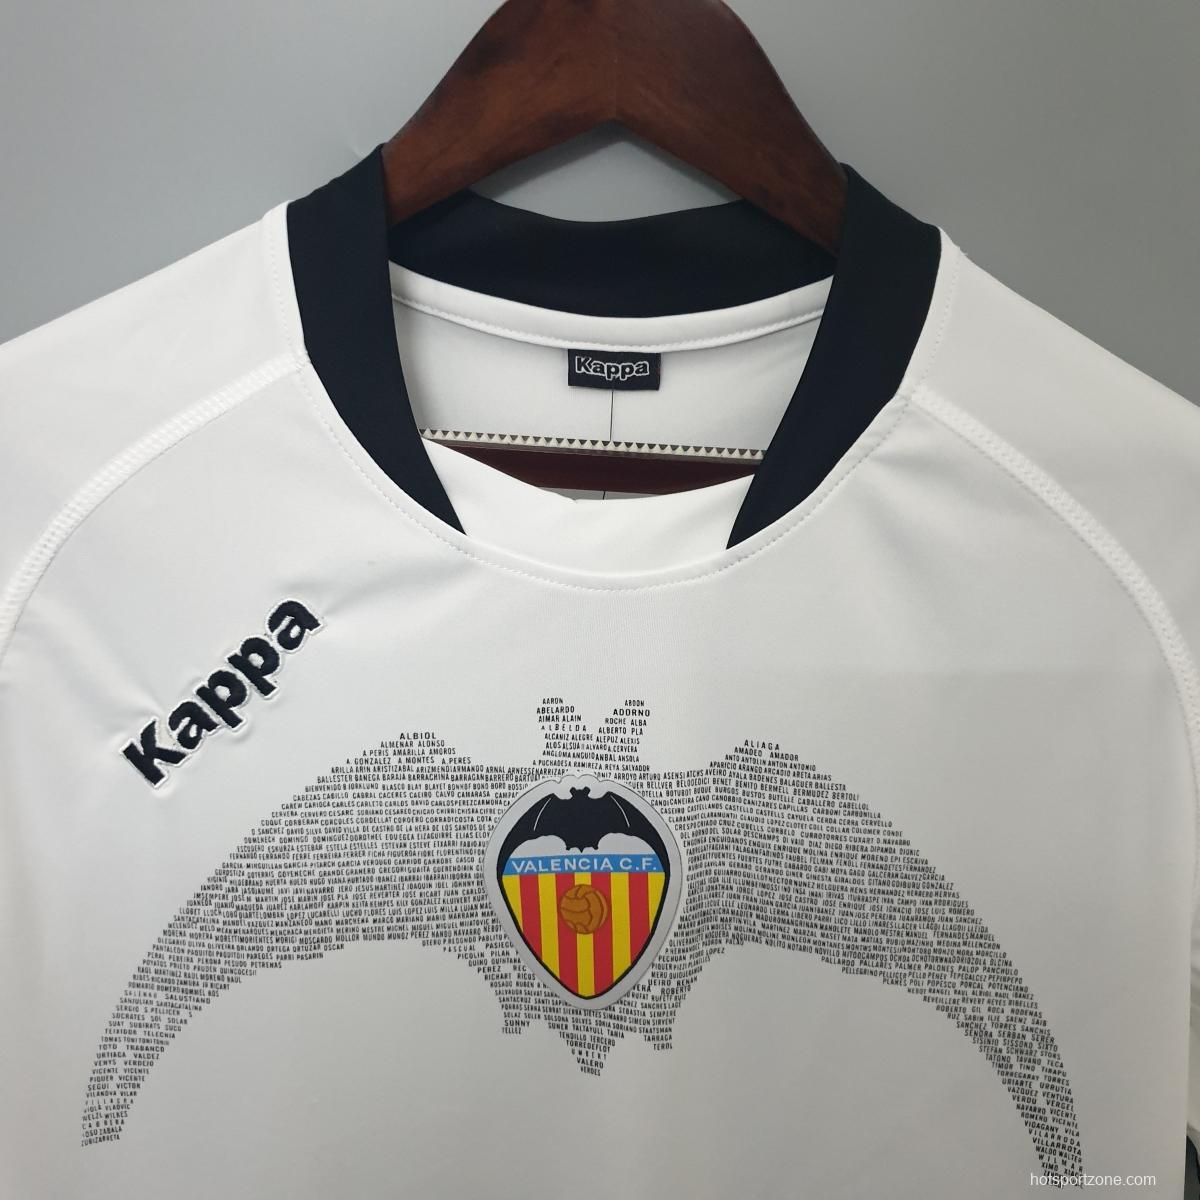 retro shirt Valencia 09/10 home Soccer Jersey